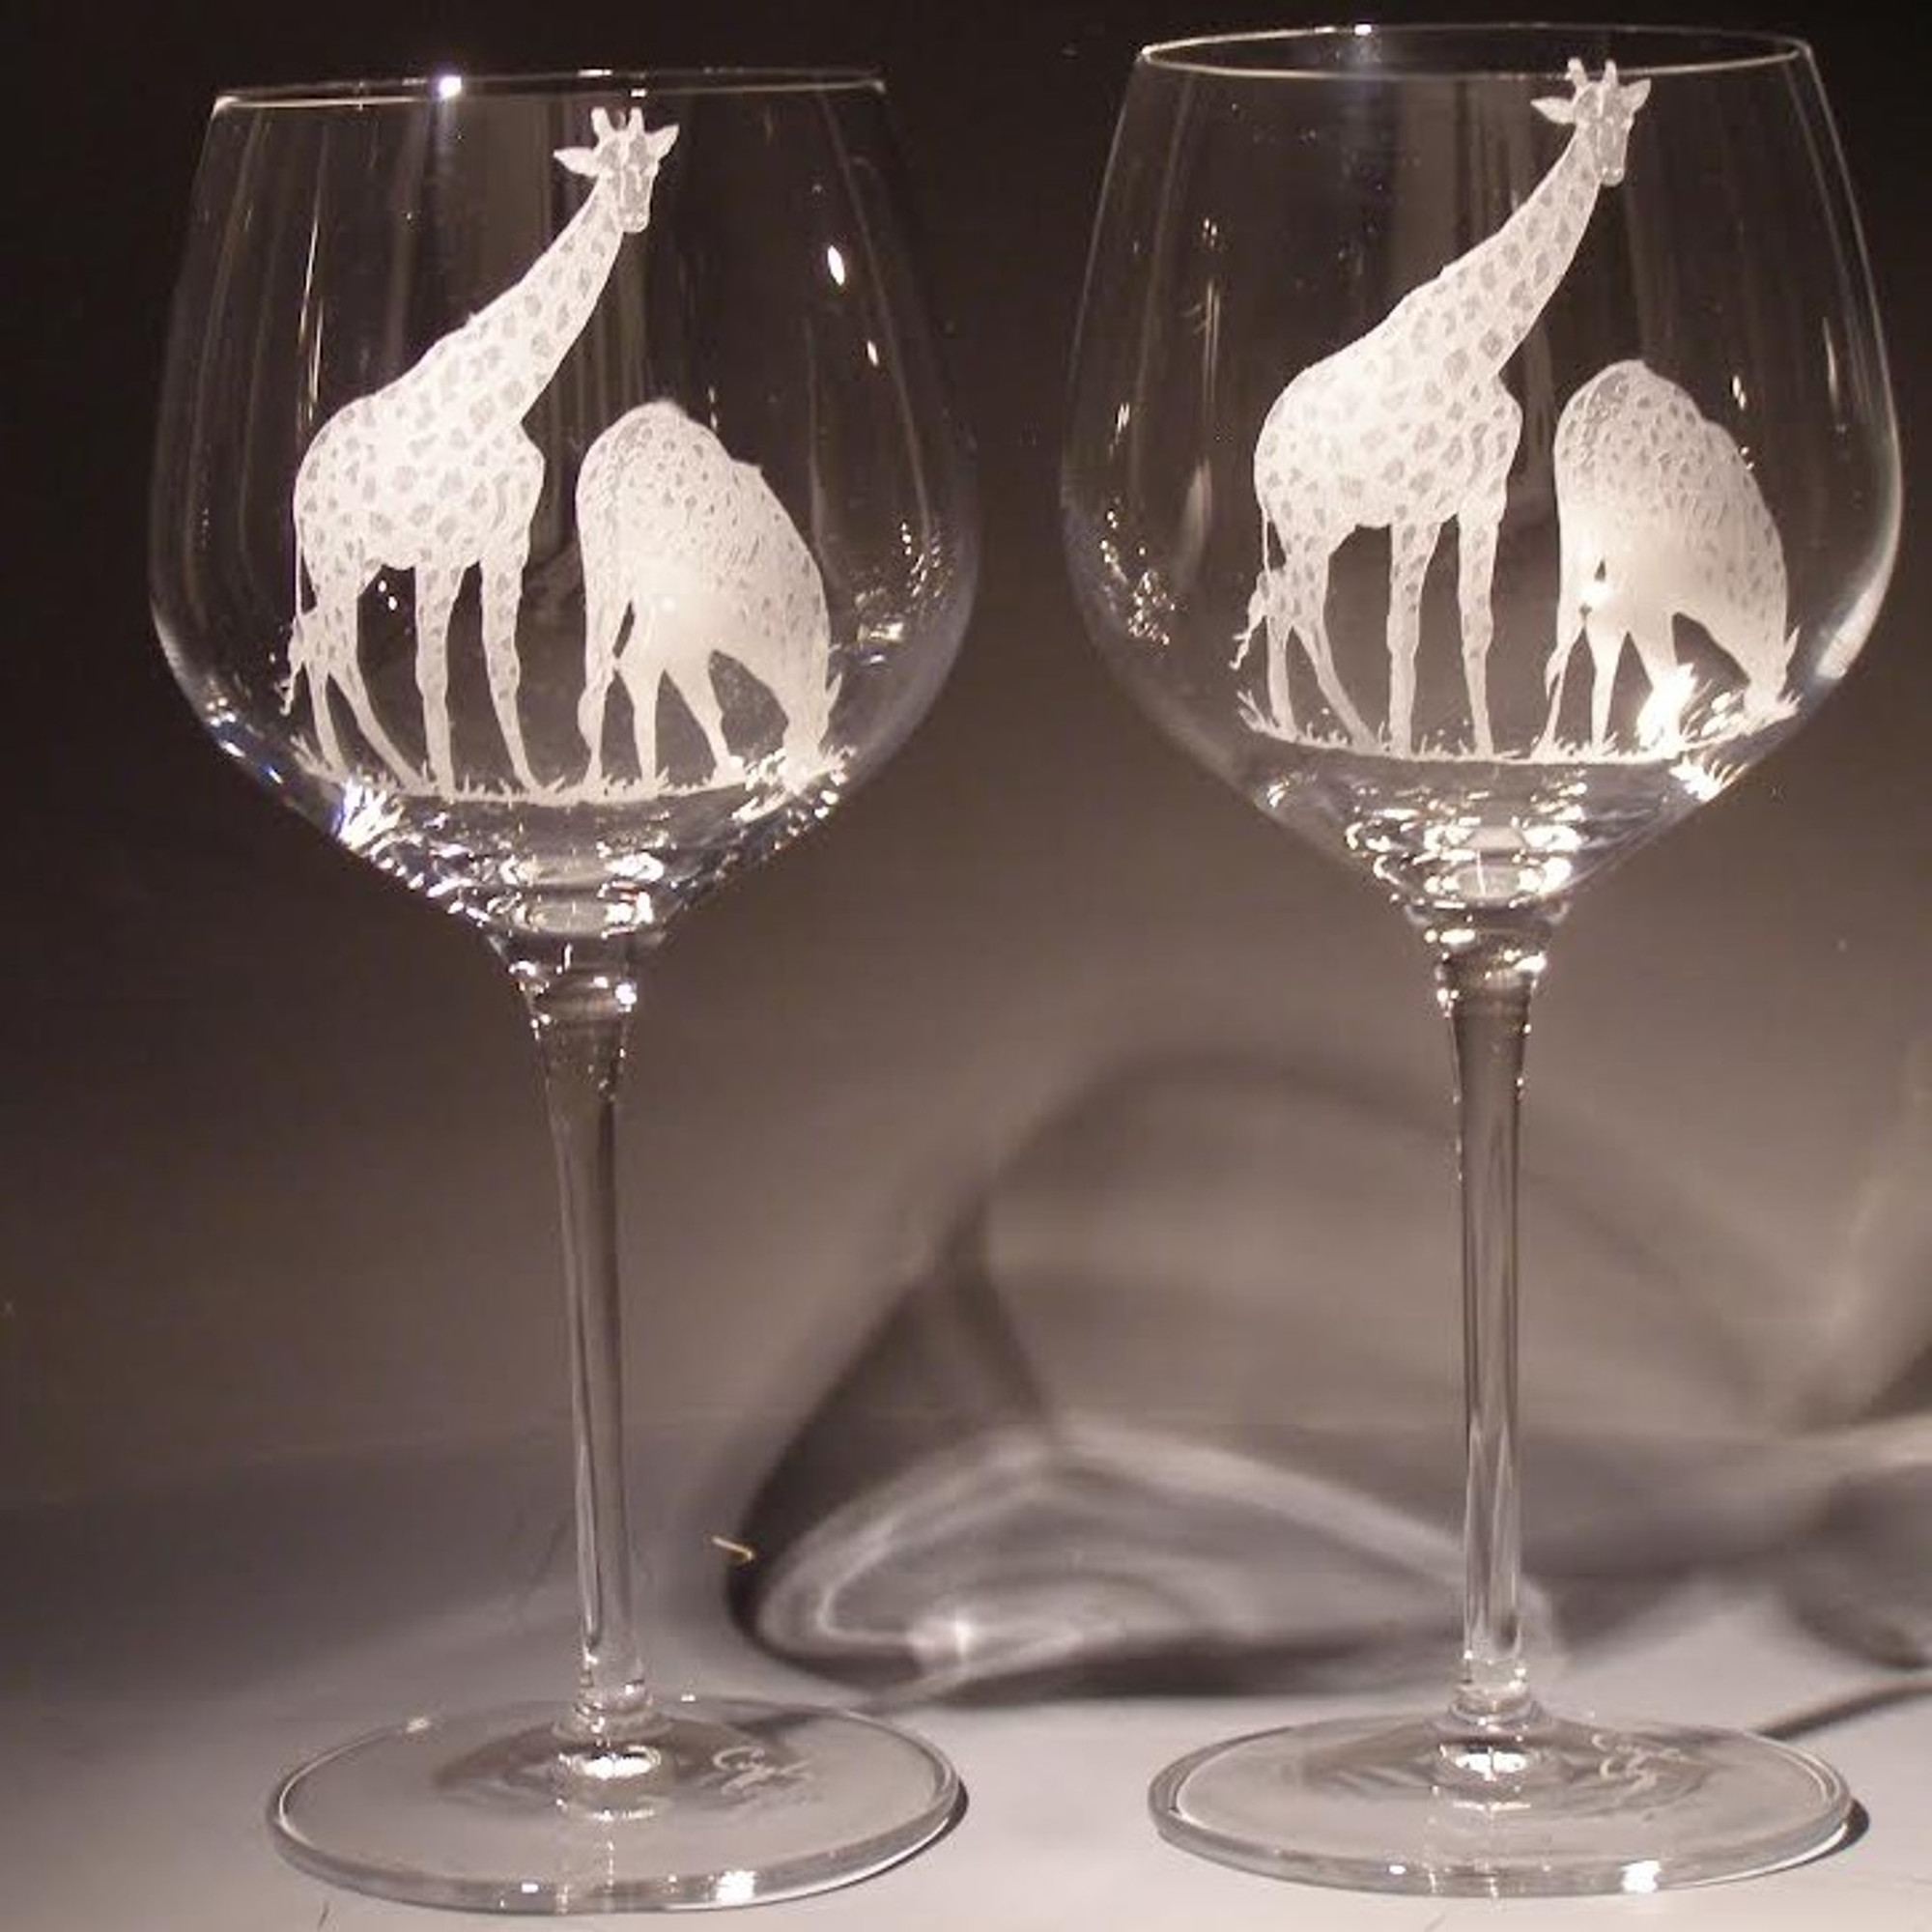 Cute Giraffe Glasses Stemless Wine Glass - Giraffe Gift, Wild